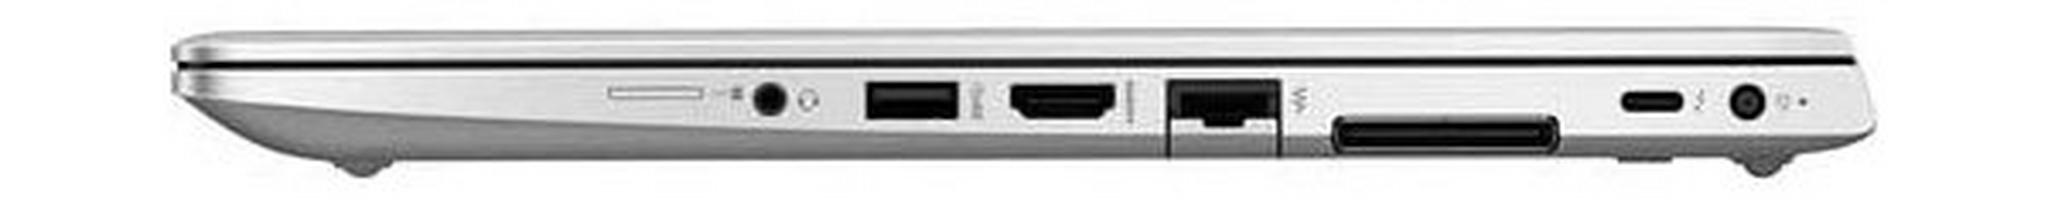 HP EliteBook 840 Core i7 8GB RAM 512GB SSD 14" SMB Laptop (8MJ72EA#ABV) - Silver